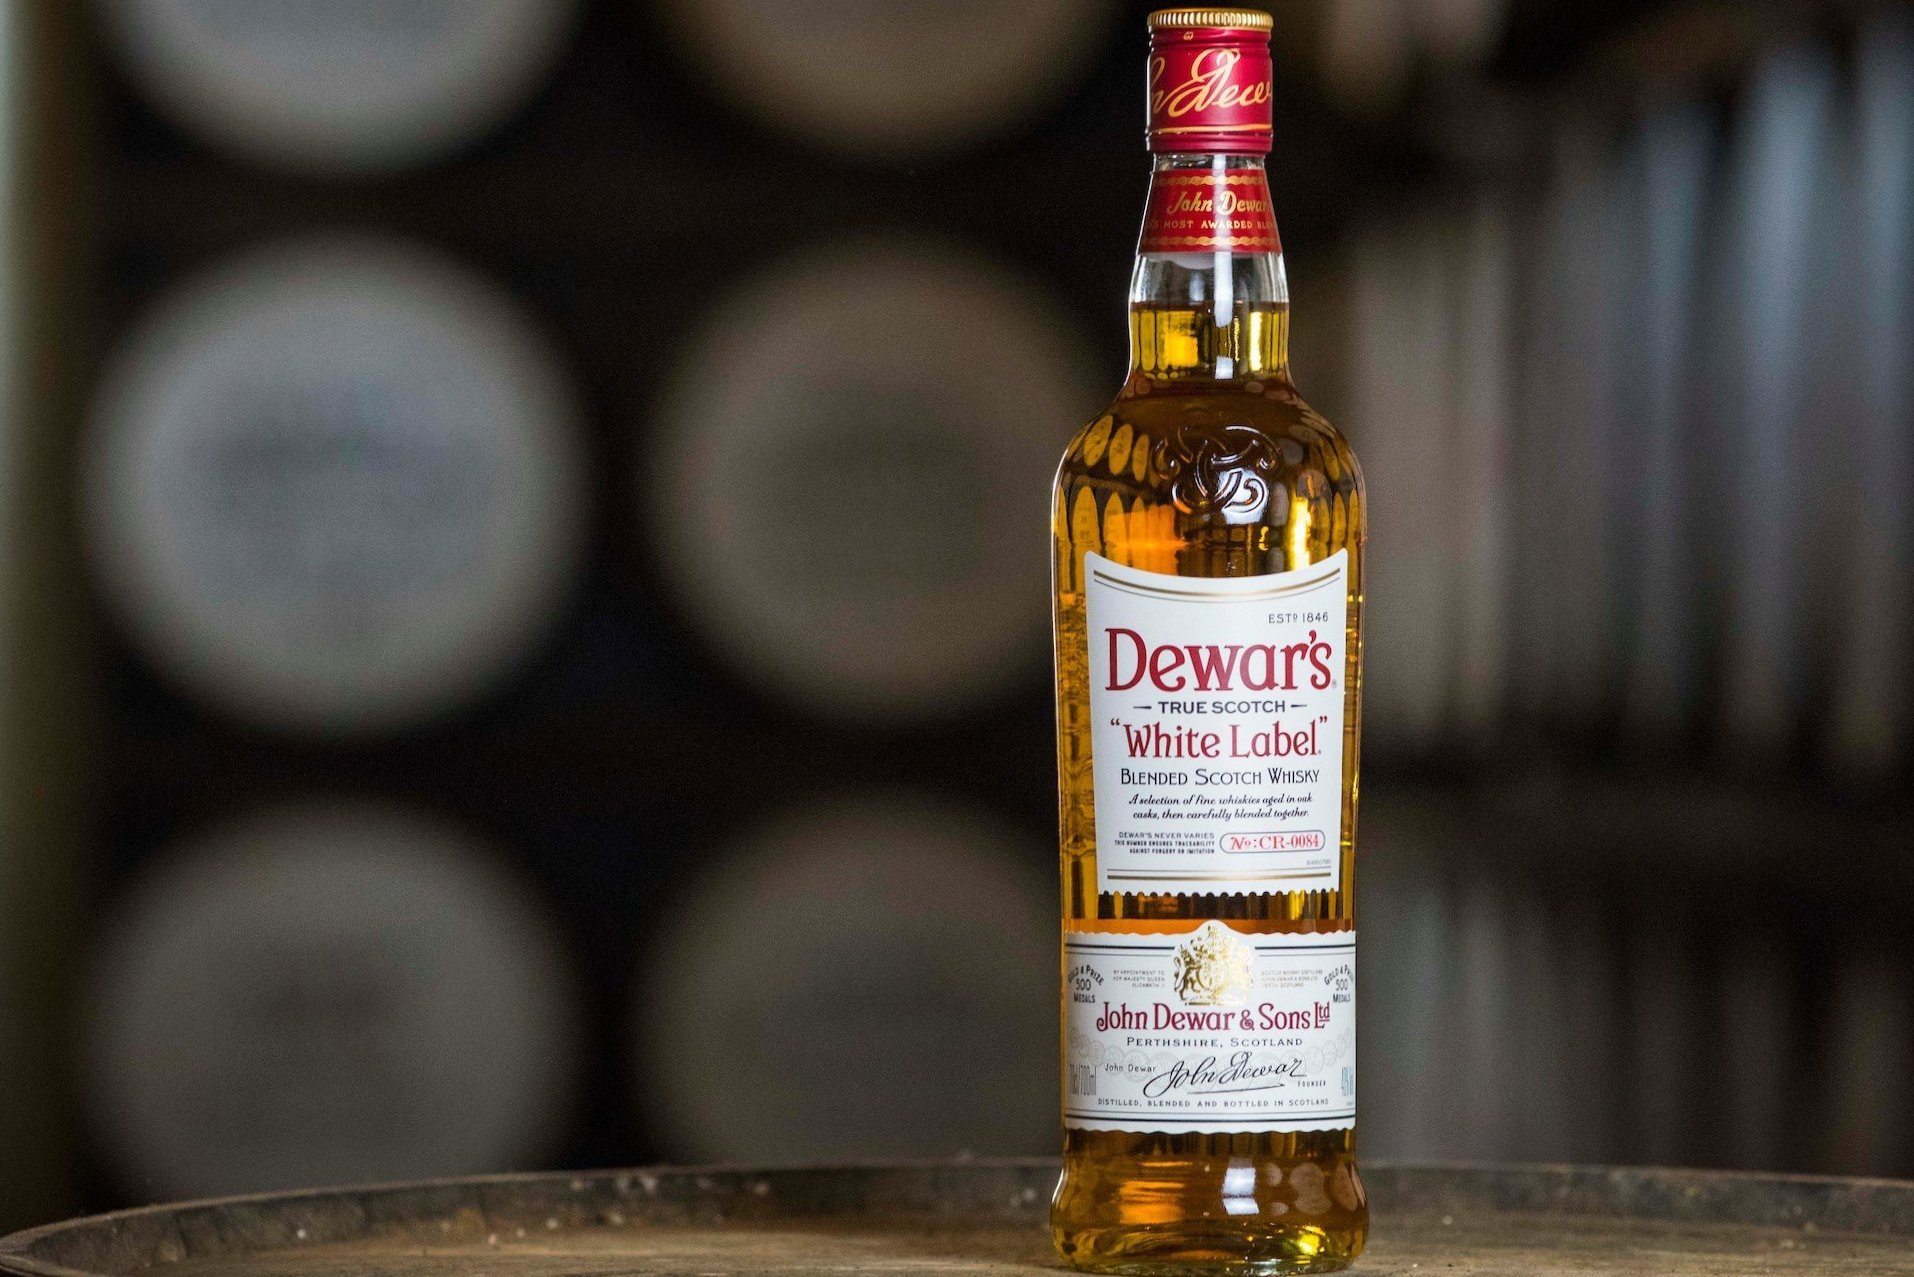 Уайт лейбл виски. Дюарс Уайт лейбл. Виски Дюарс Уайт. Виски деварс Вайт лейбл. Dewars White Label Blended Scotland Whisky.